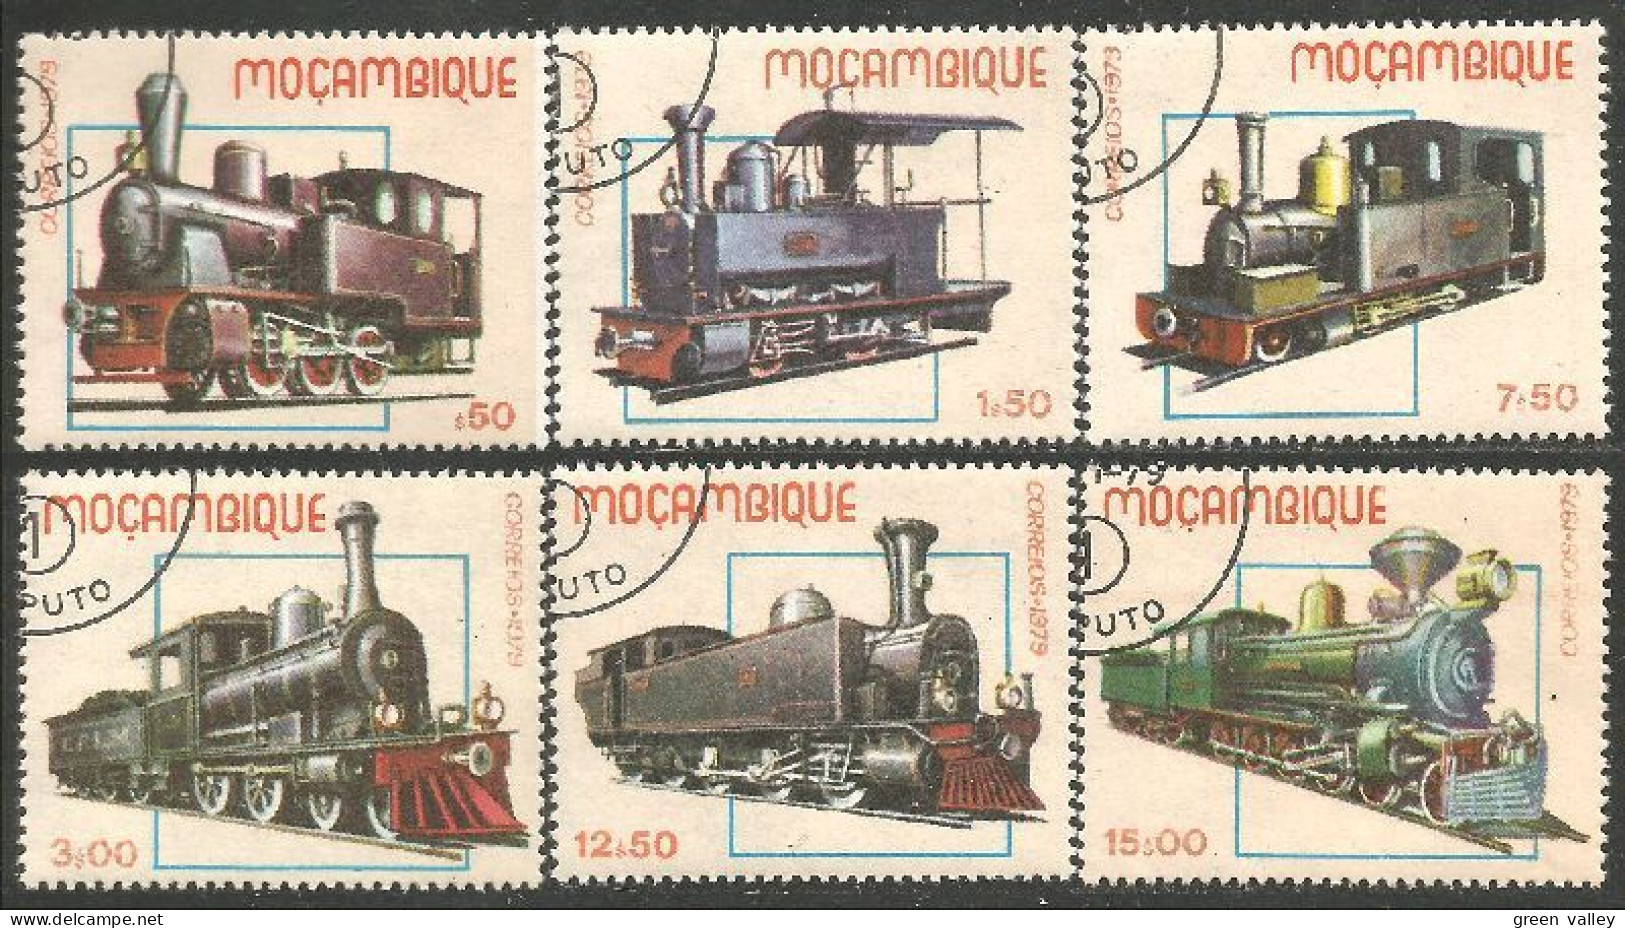 TR-51a Mozambique Train Locomotive Lokomotive Zug Treno - Trains